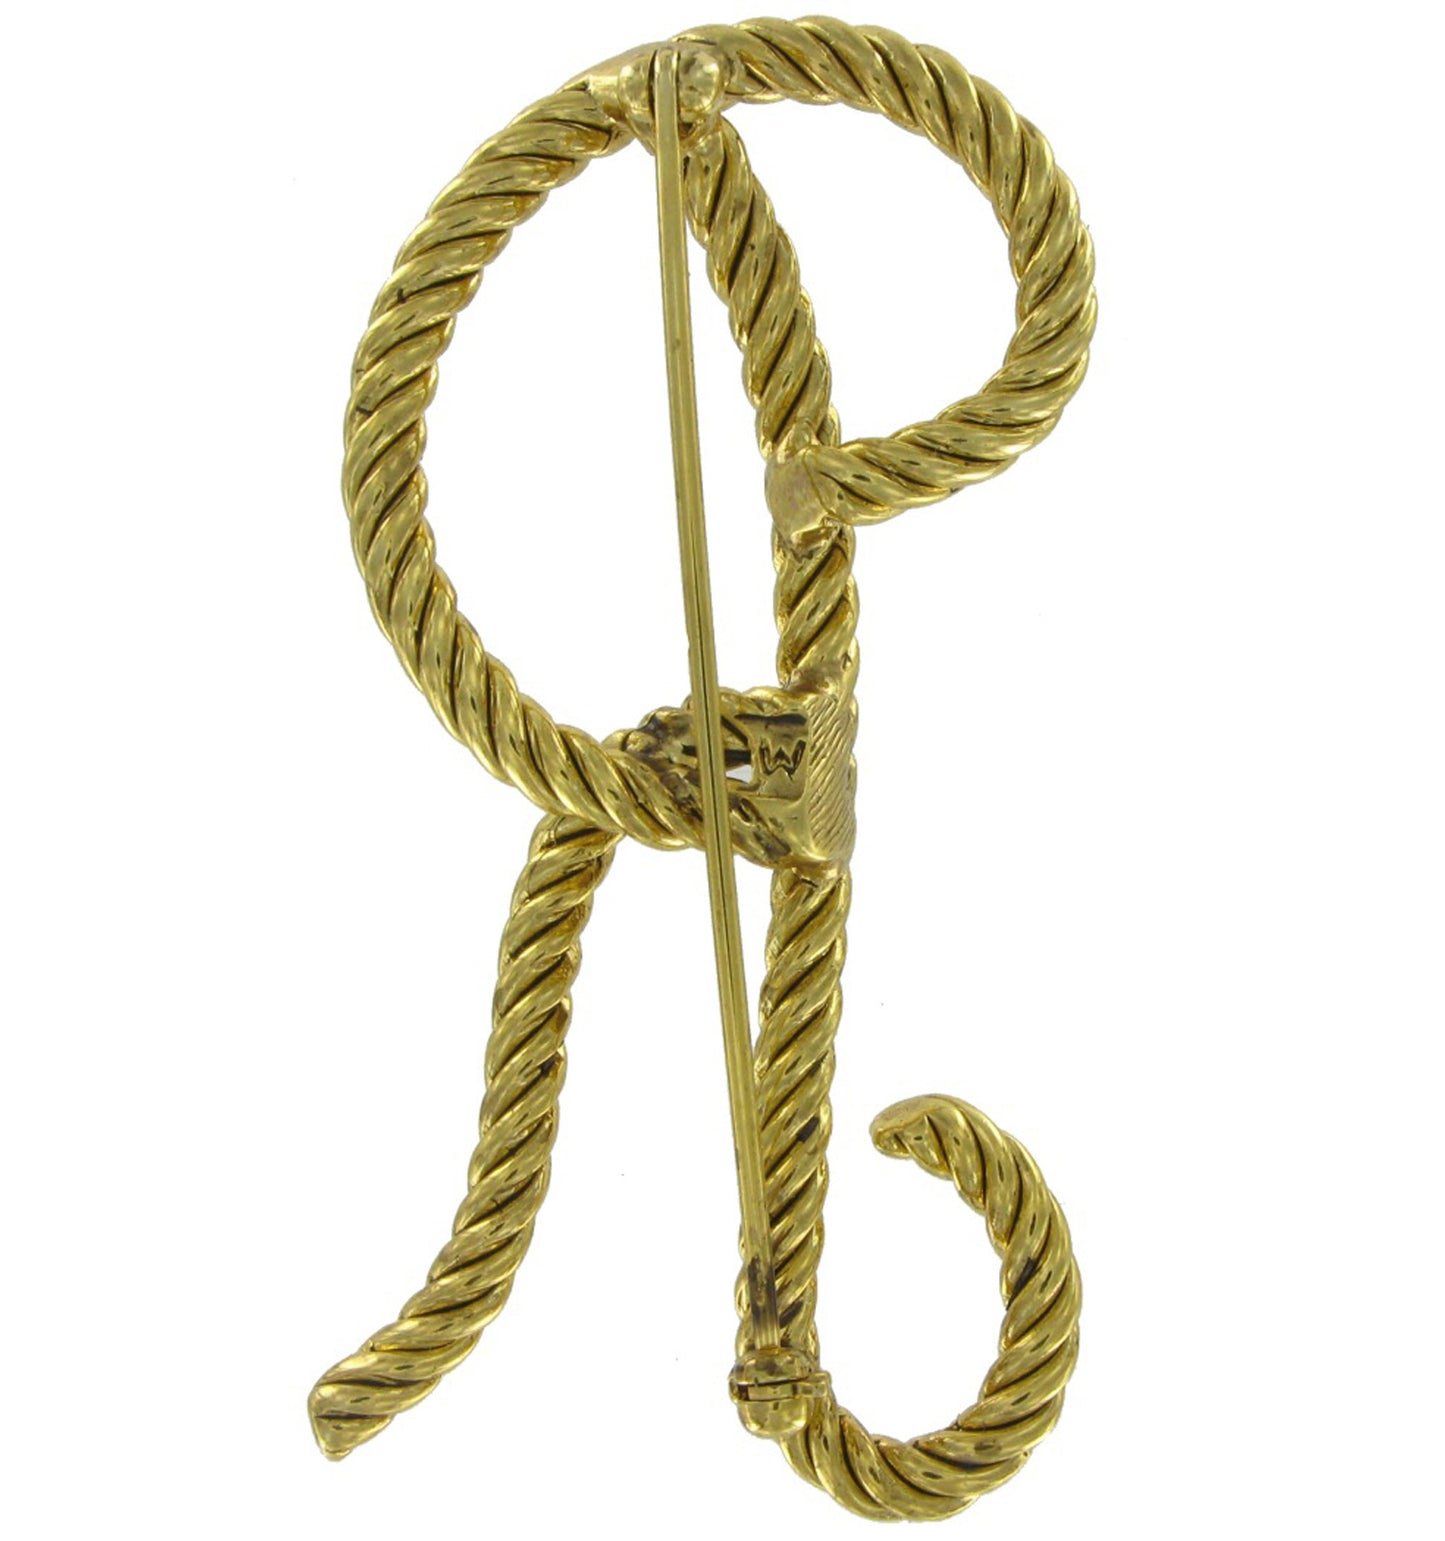 Large Big Script Cursive Gold Tone Rope Initial Letter "R" Pin Brooch 2 1/2"